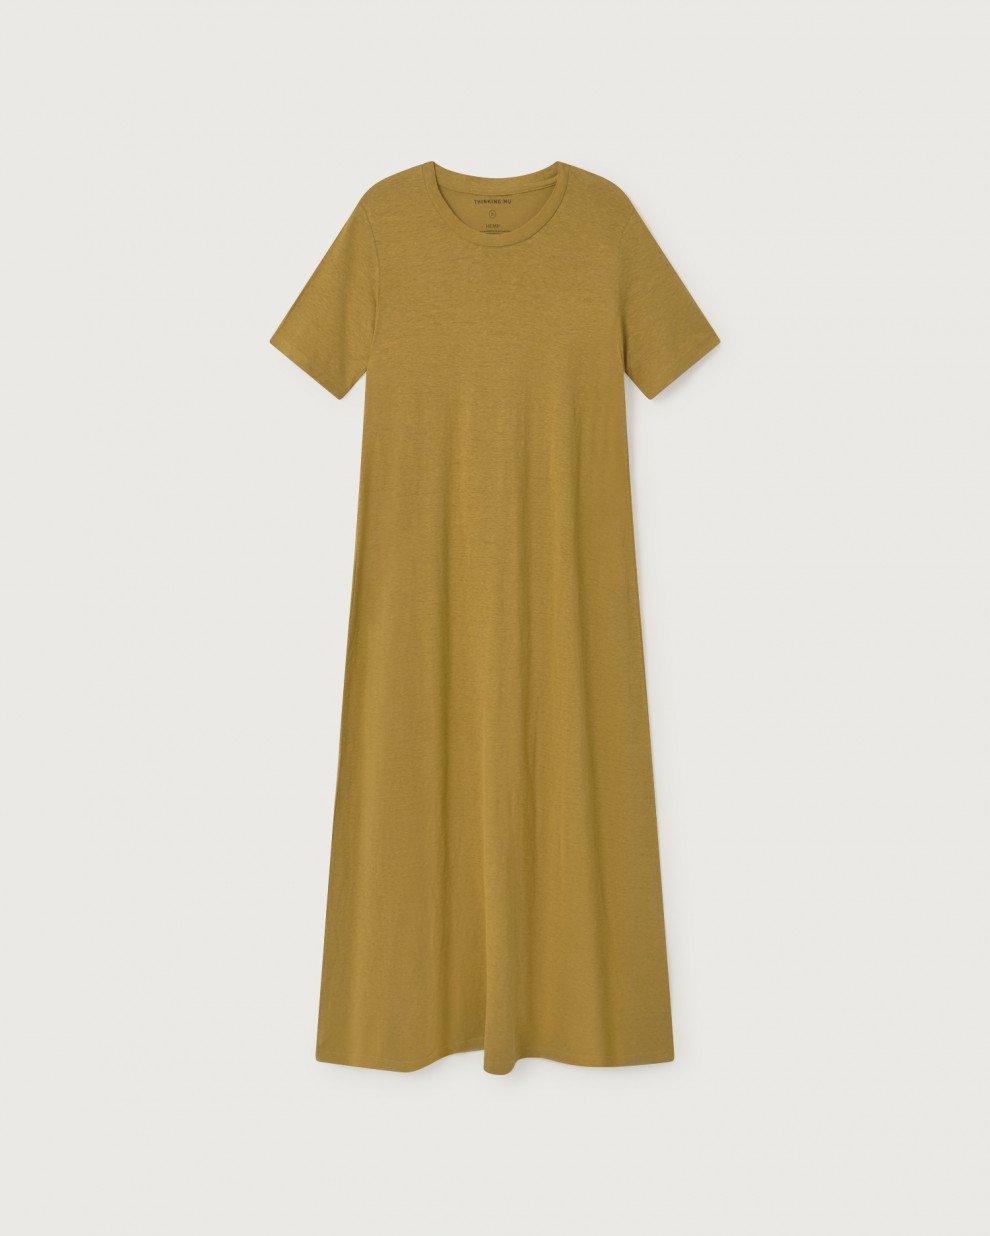 Preloved Oueme Hemp Dress in Mustard